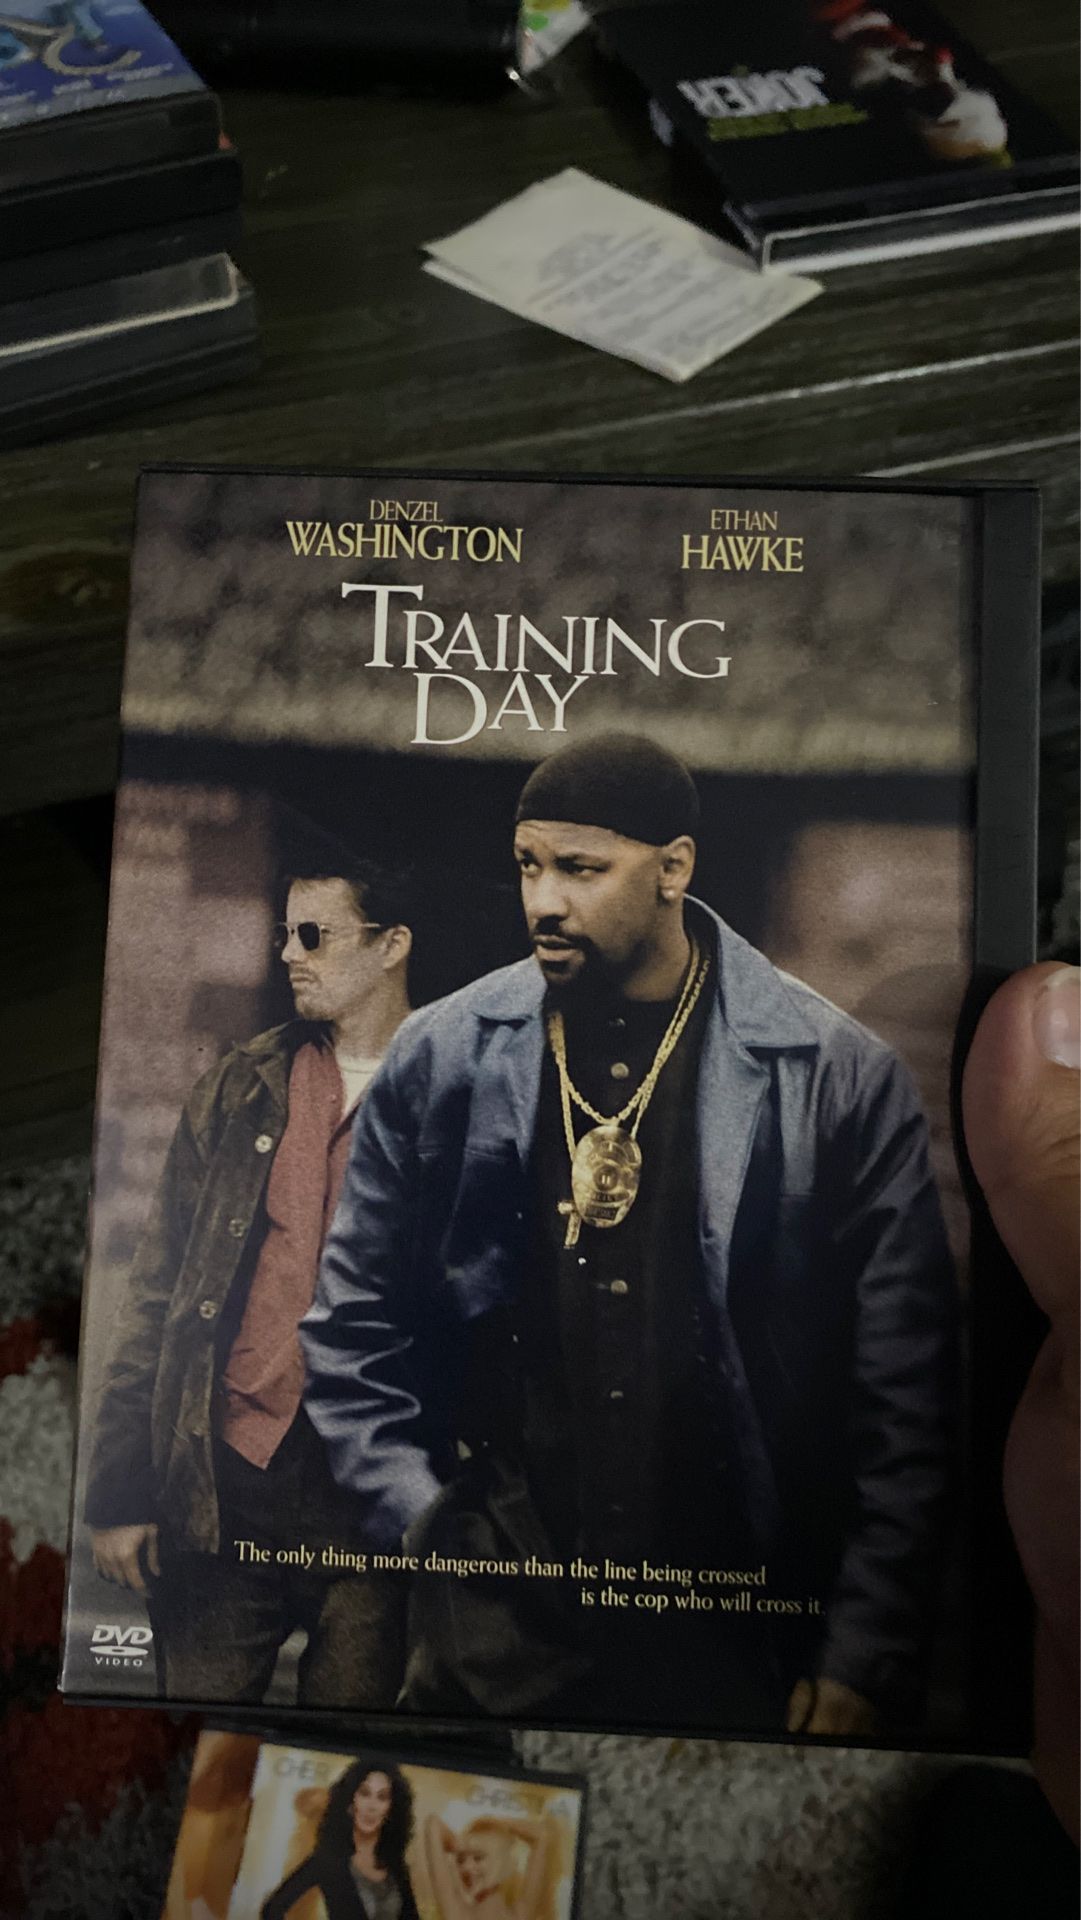 Training day DVD